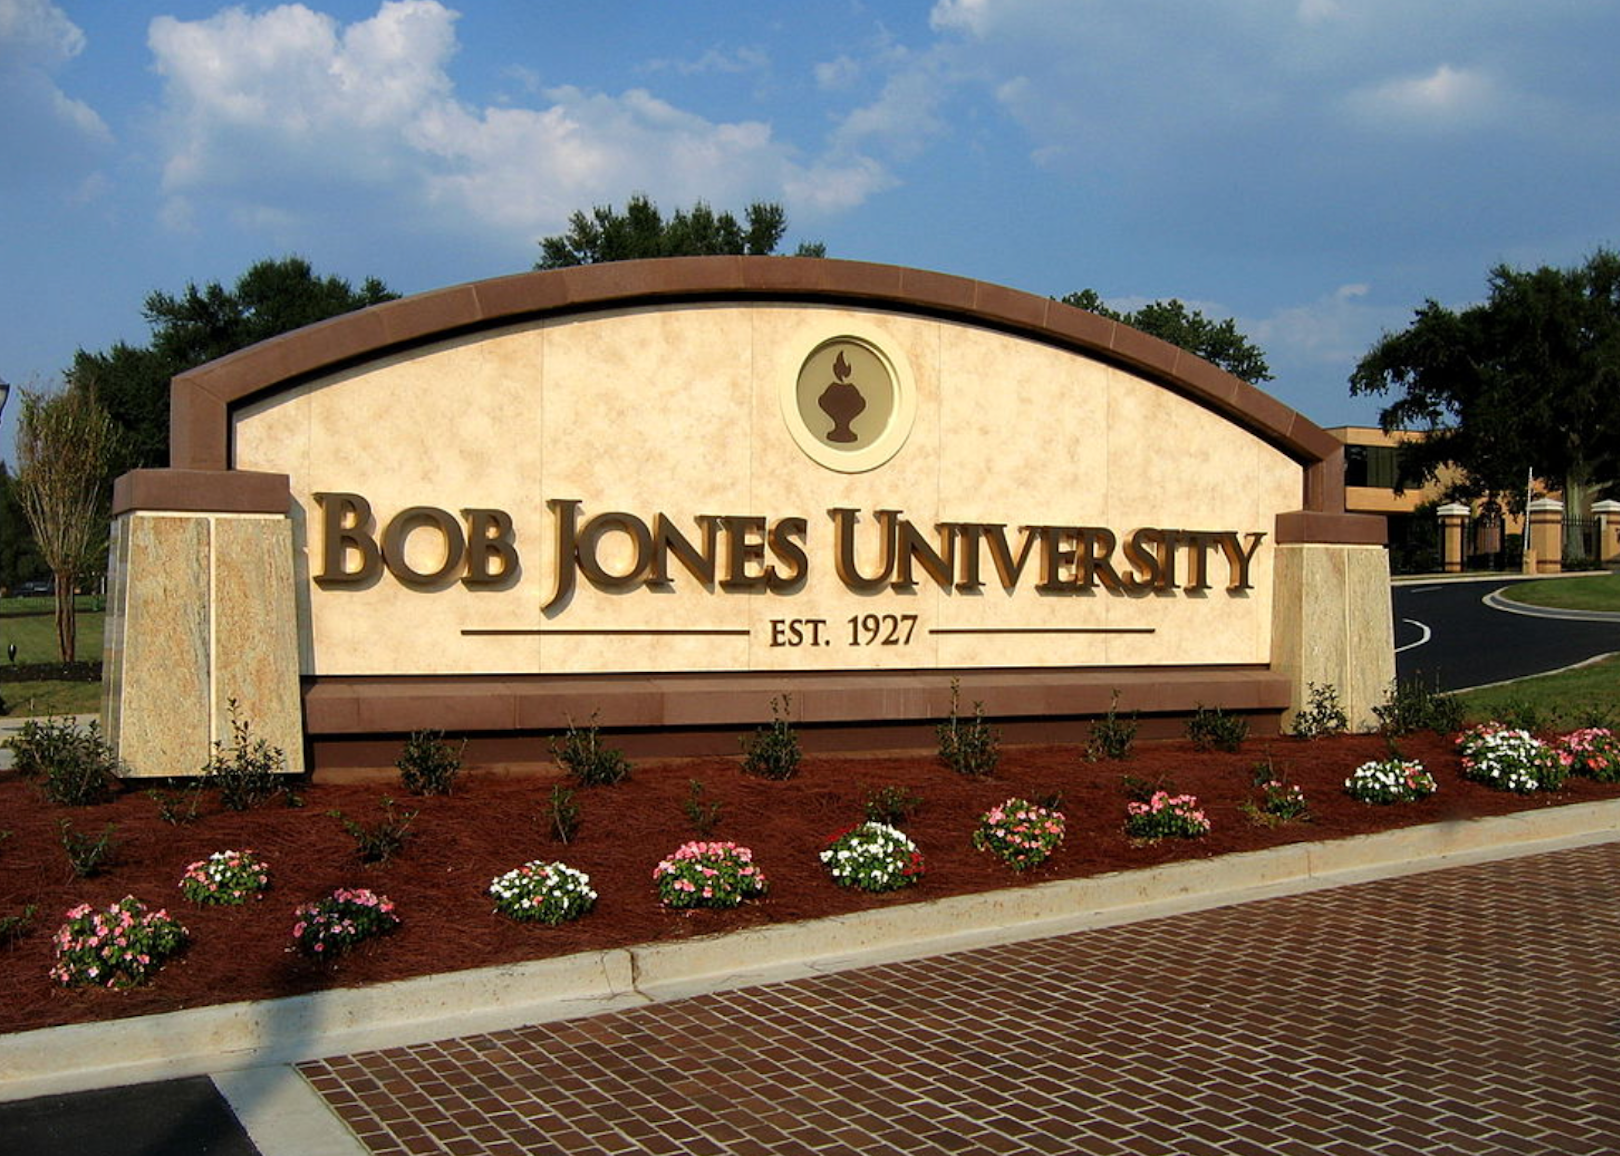 The entrance to Bob Jones University.